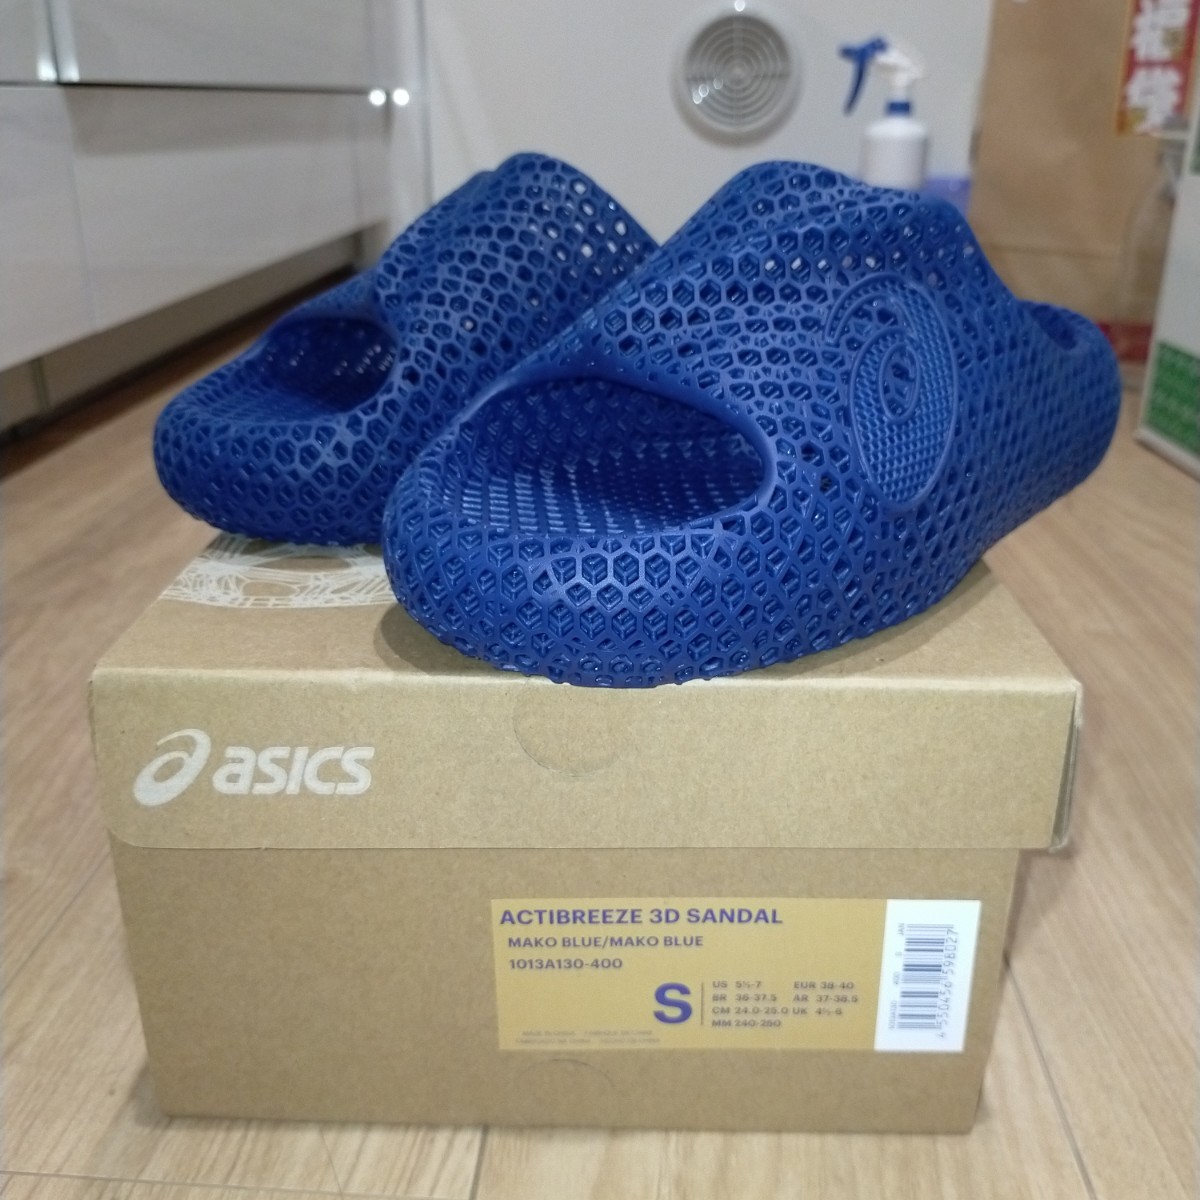 Asics Actibreeze 3D Sandal Sサイズ アシックス サンダル